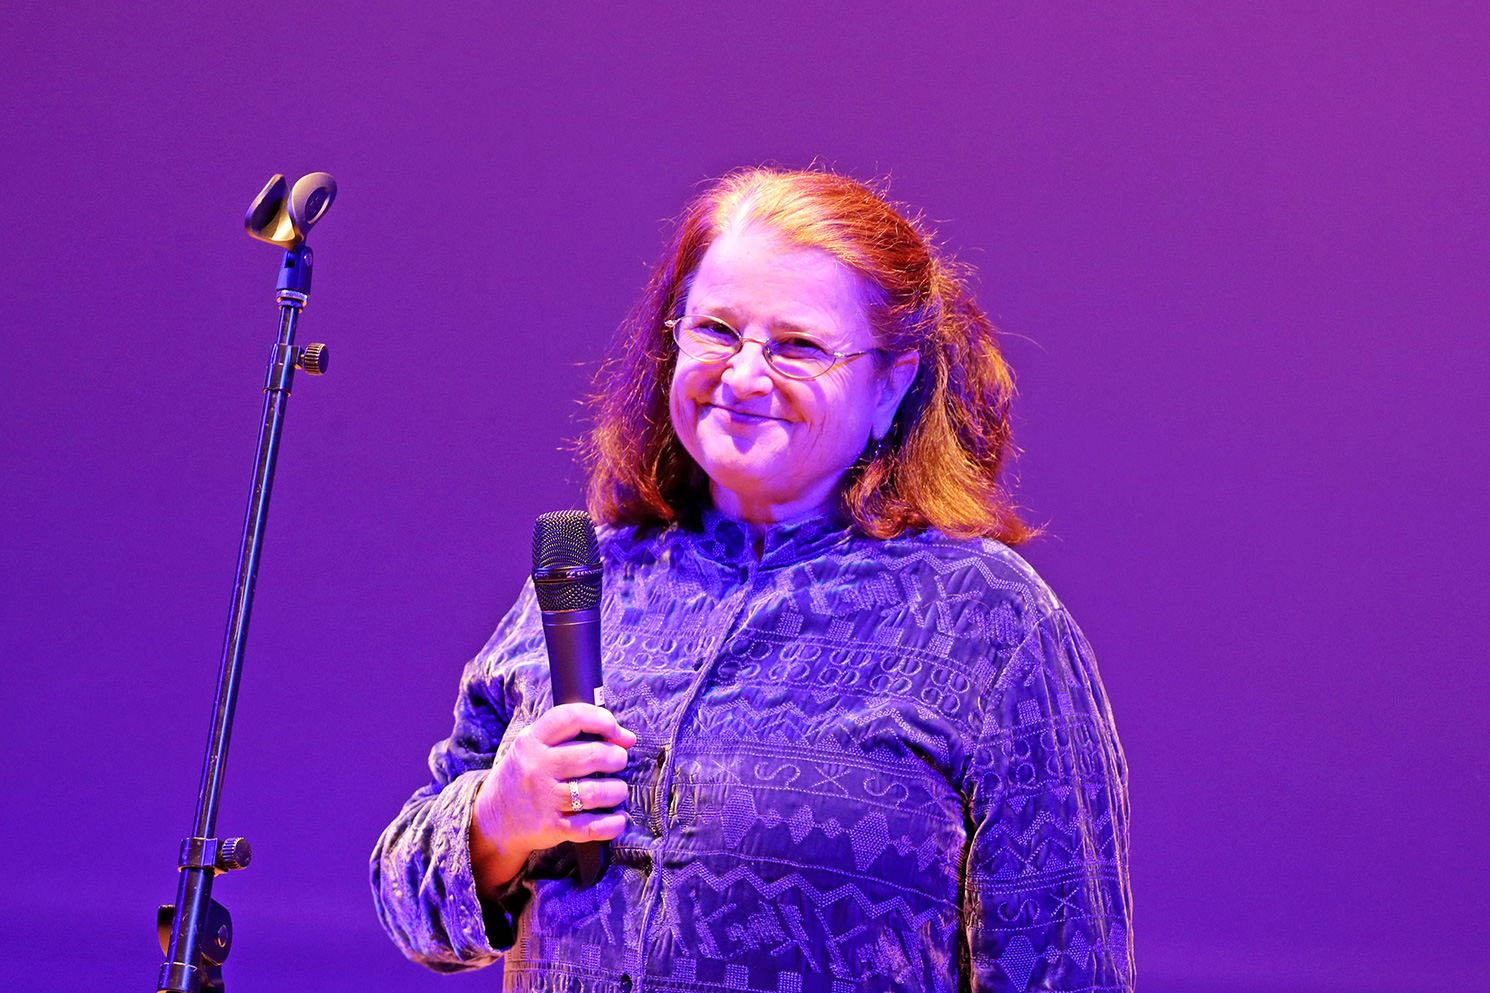  Katharine Harbury holding a microphone on stage